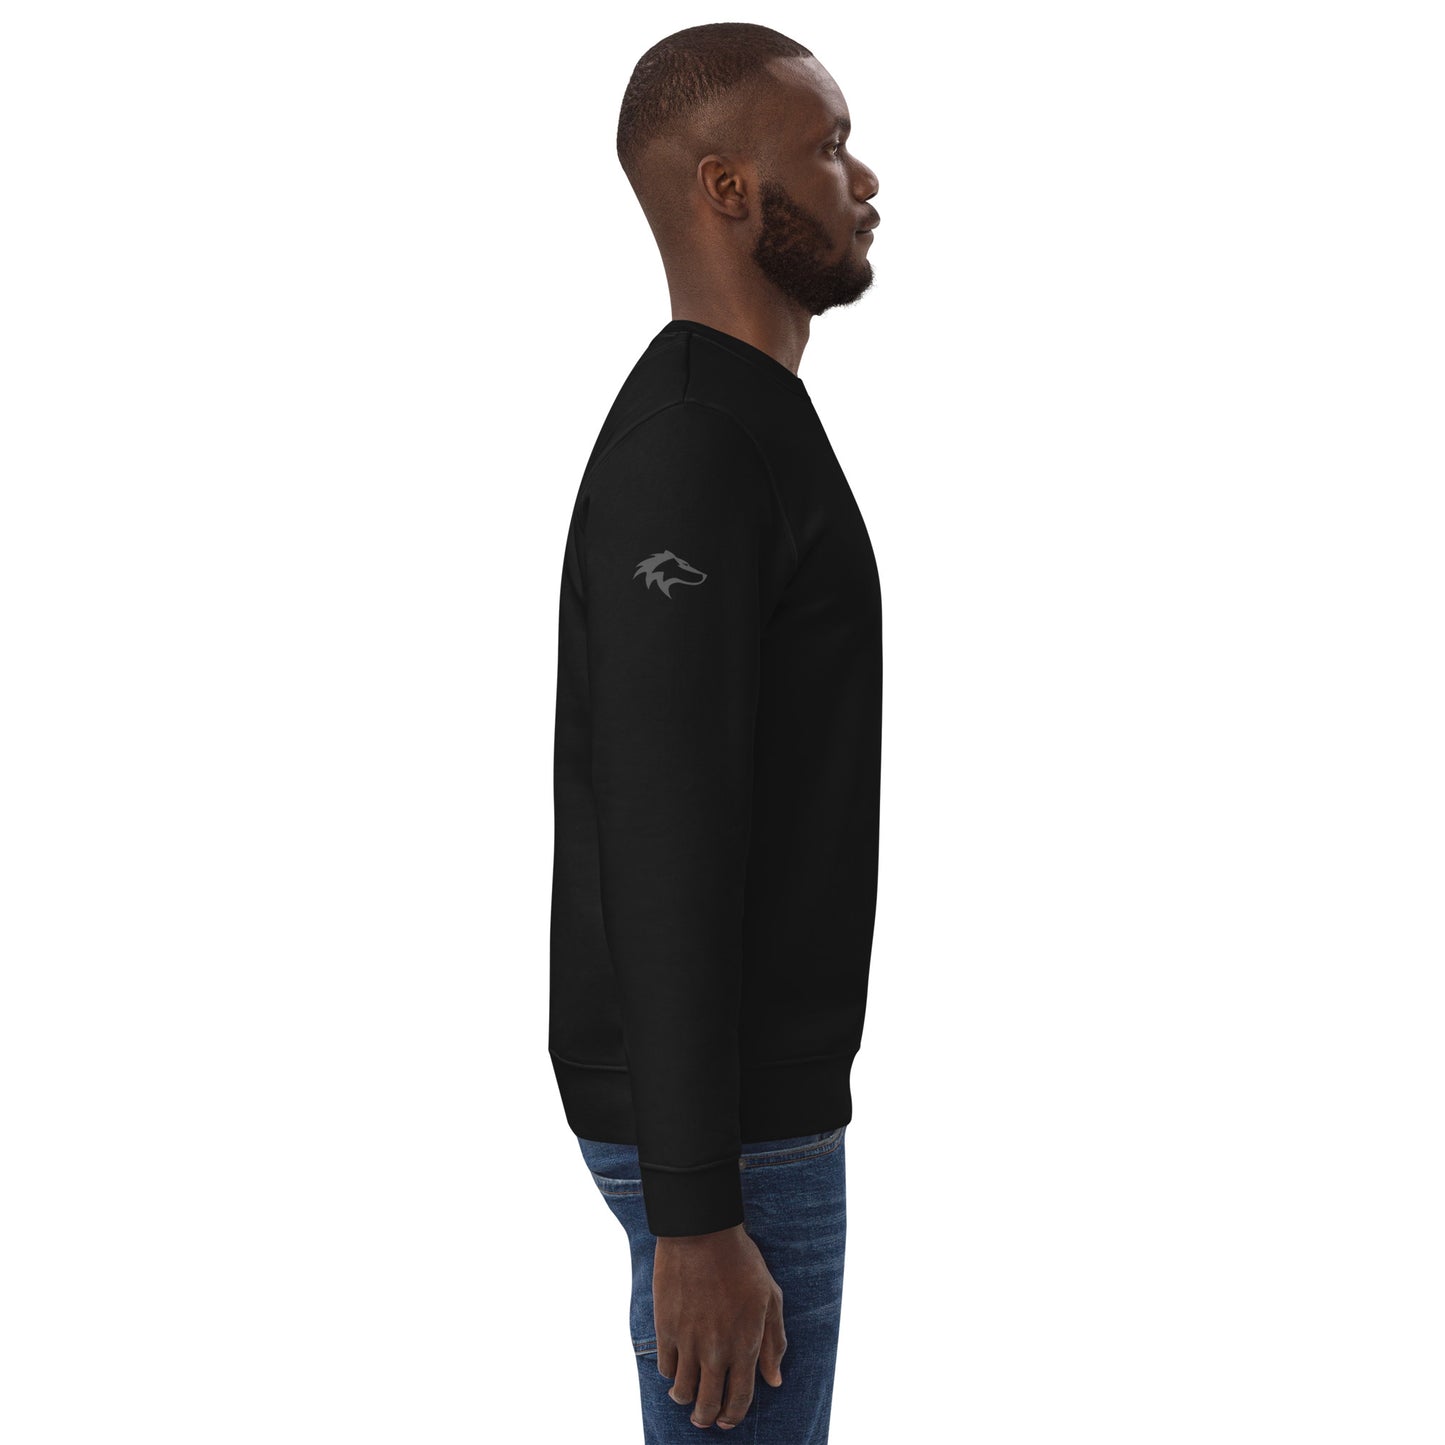 Unisex WARDOG sweatshirt